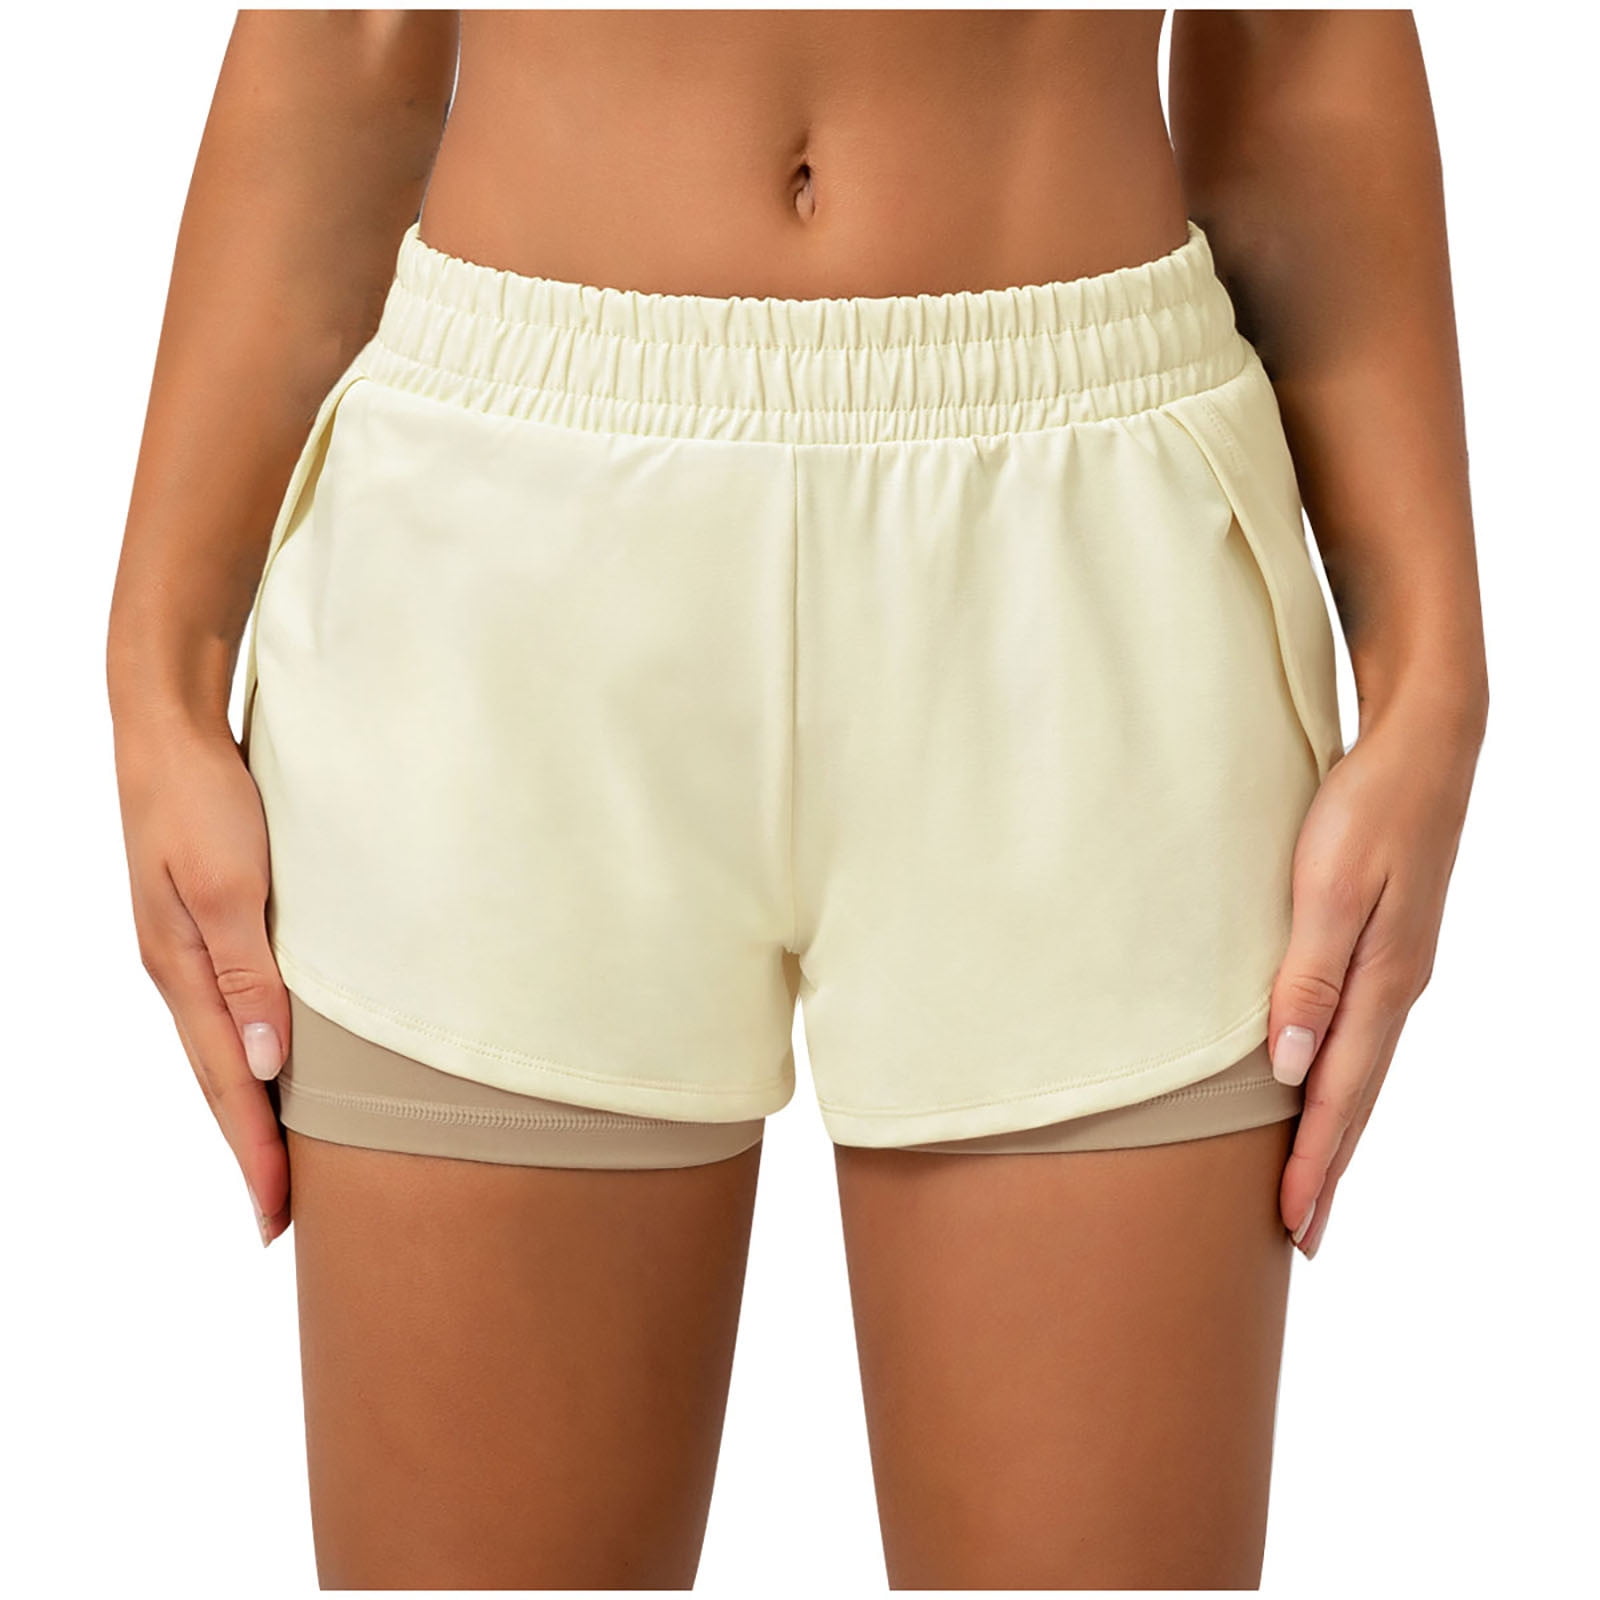 Women's gym shorts, brown